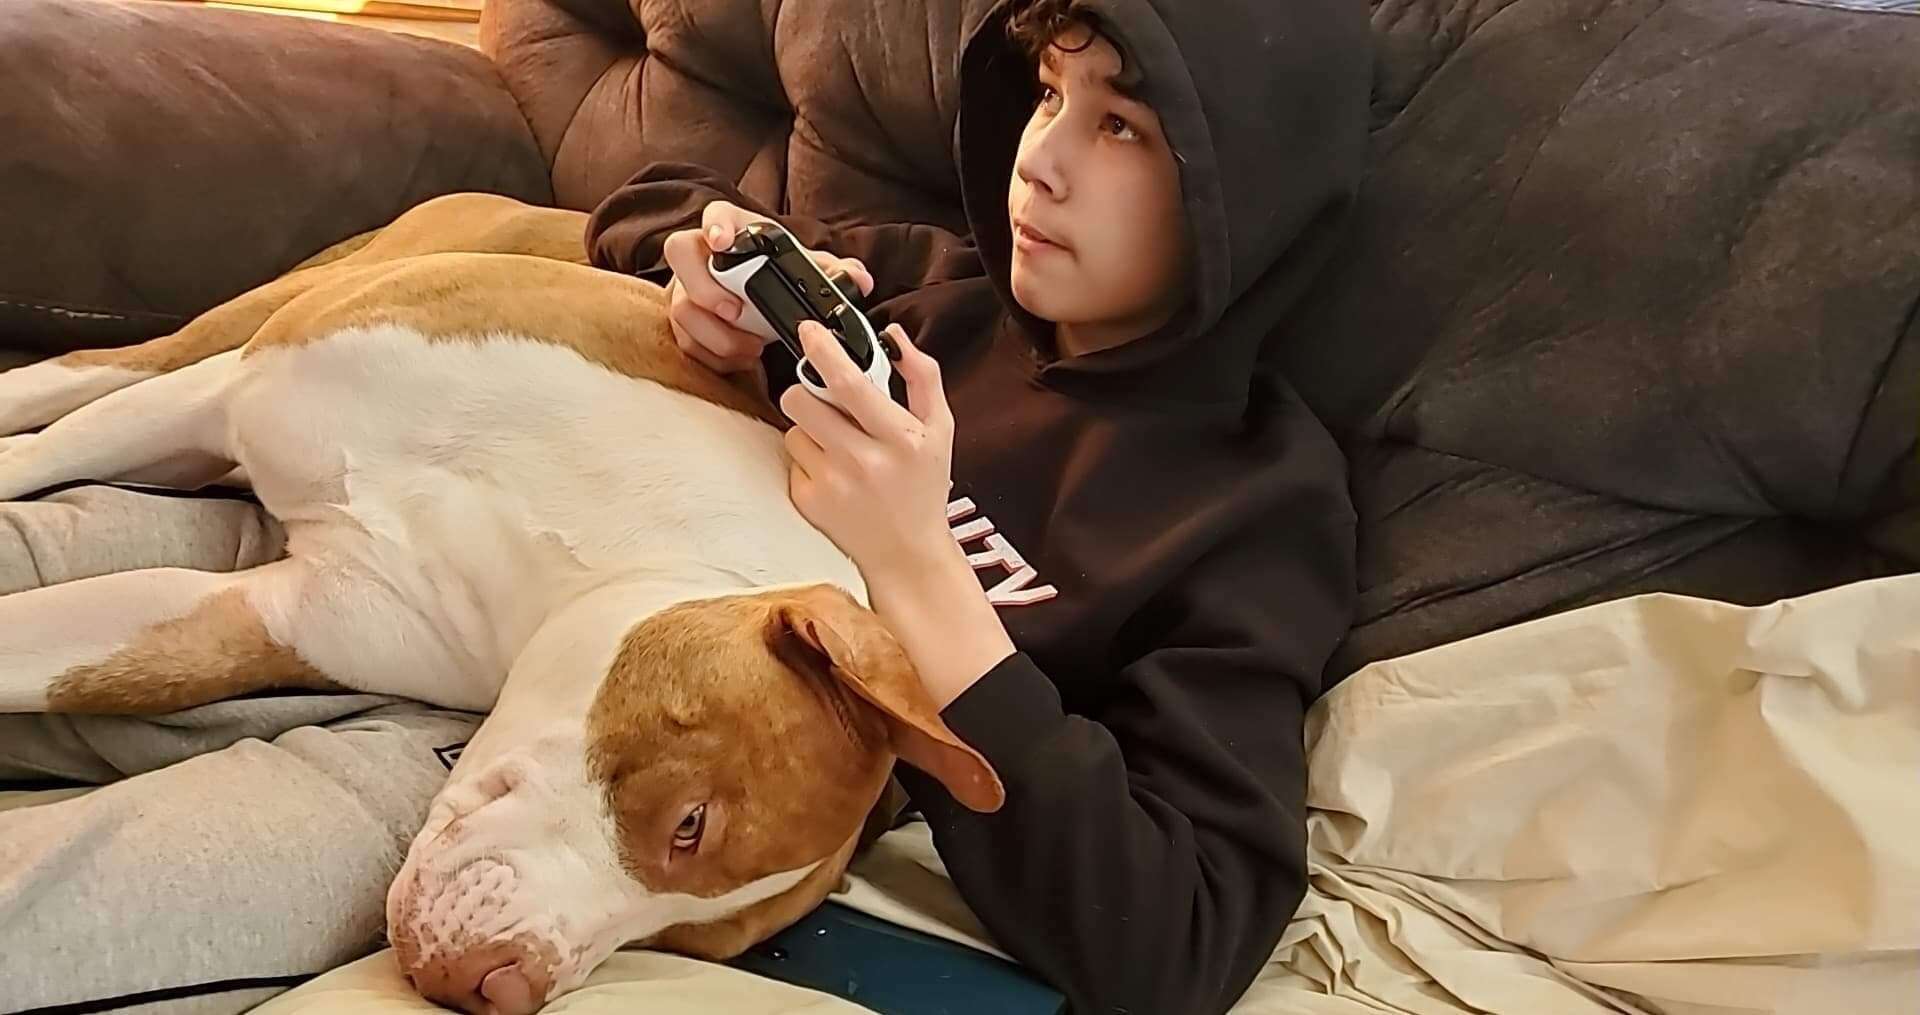 Hero dog alerts family to boy's allergic reaction